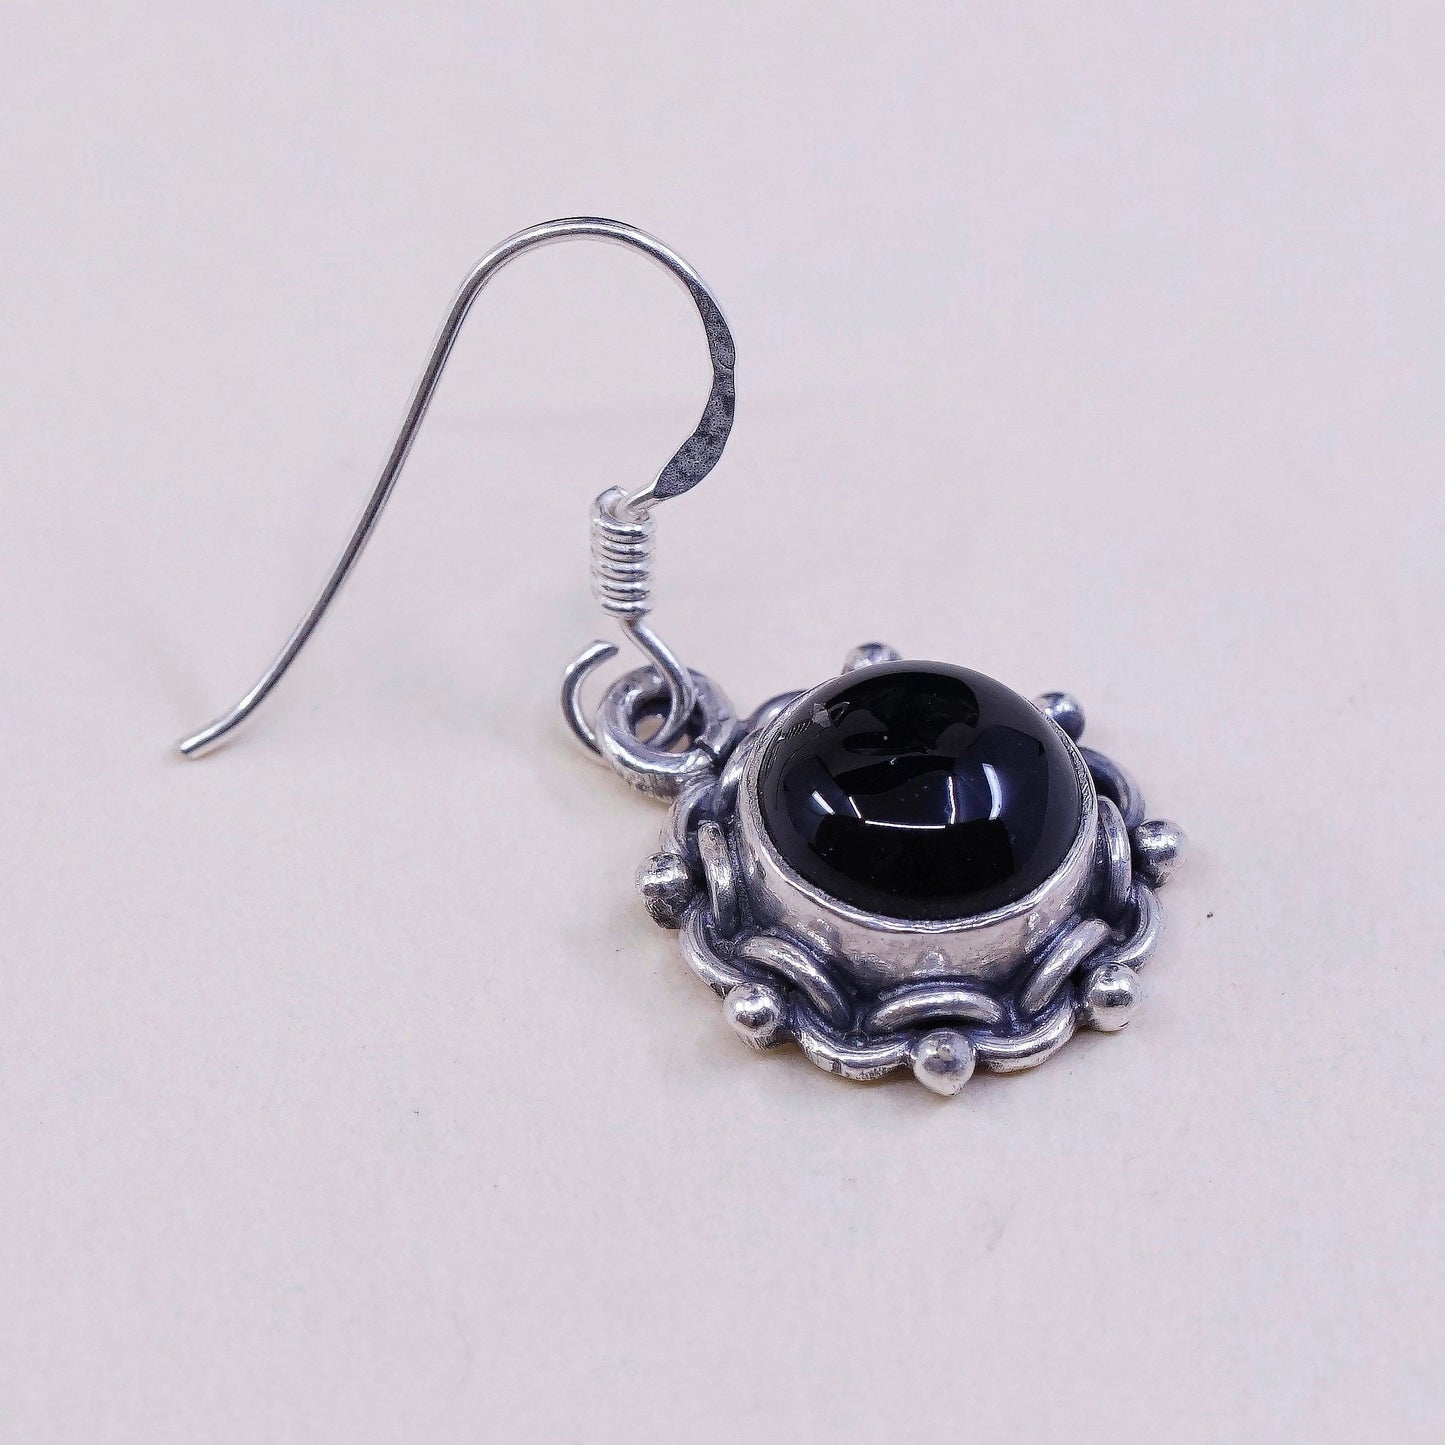 vtg Sterling silver handmade earrings, 925 drops w/ obsidian n beads